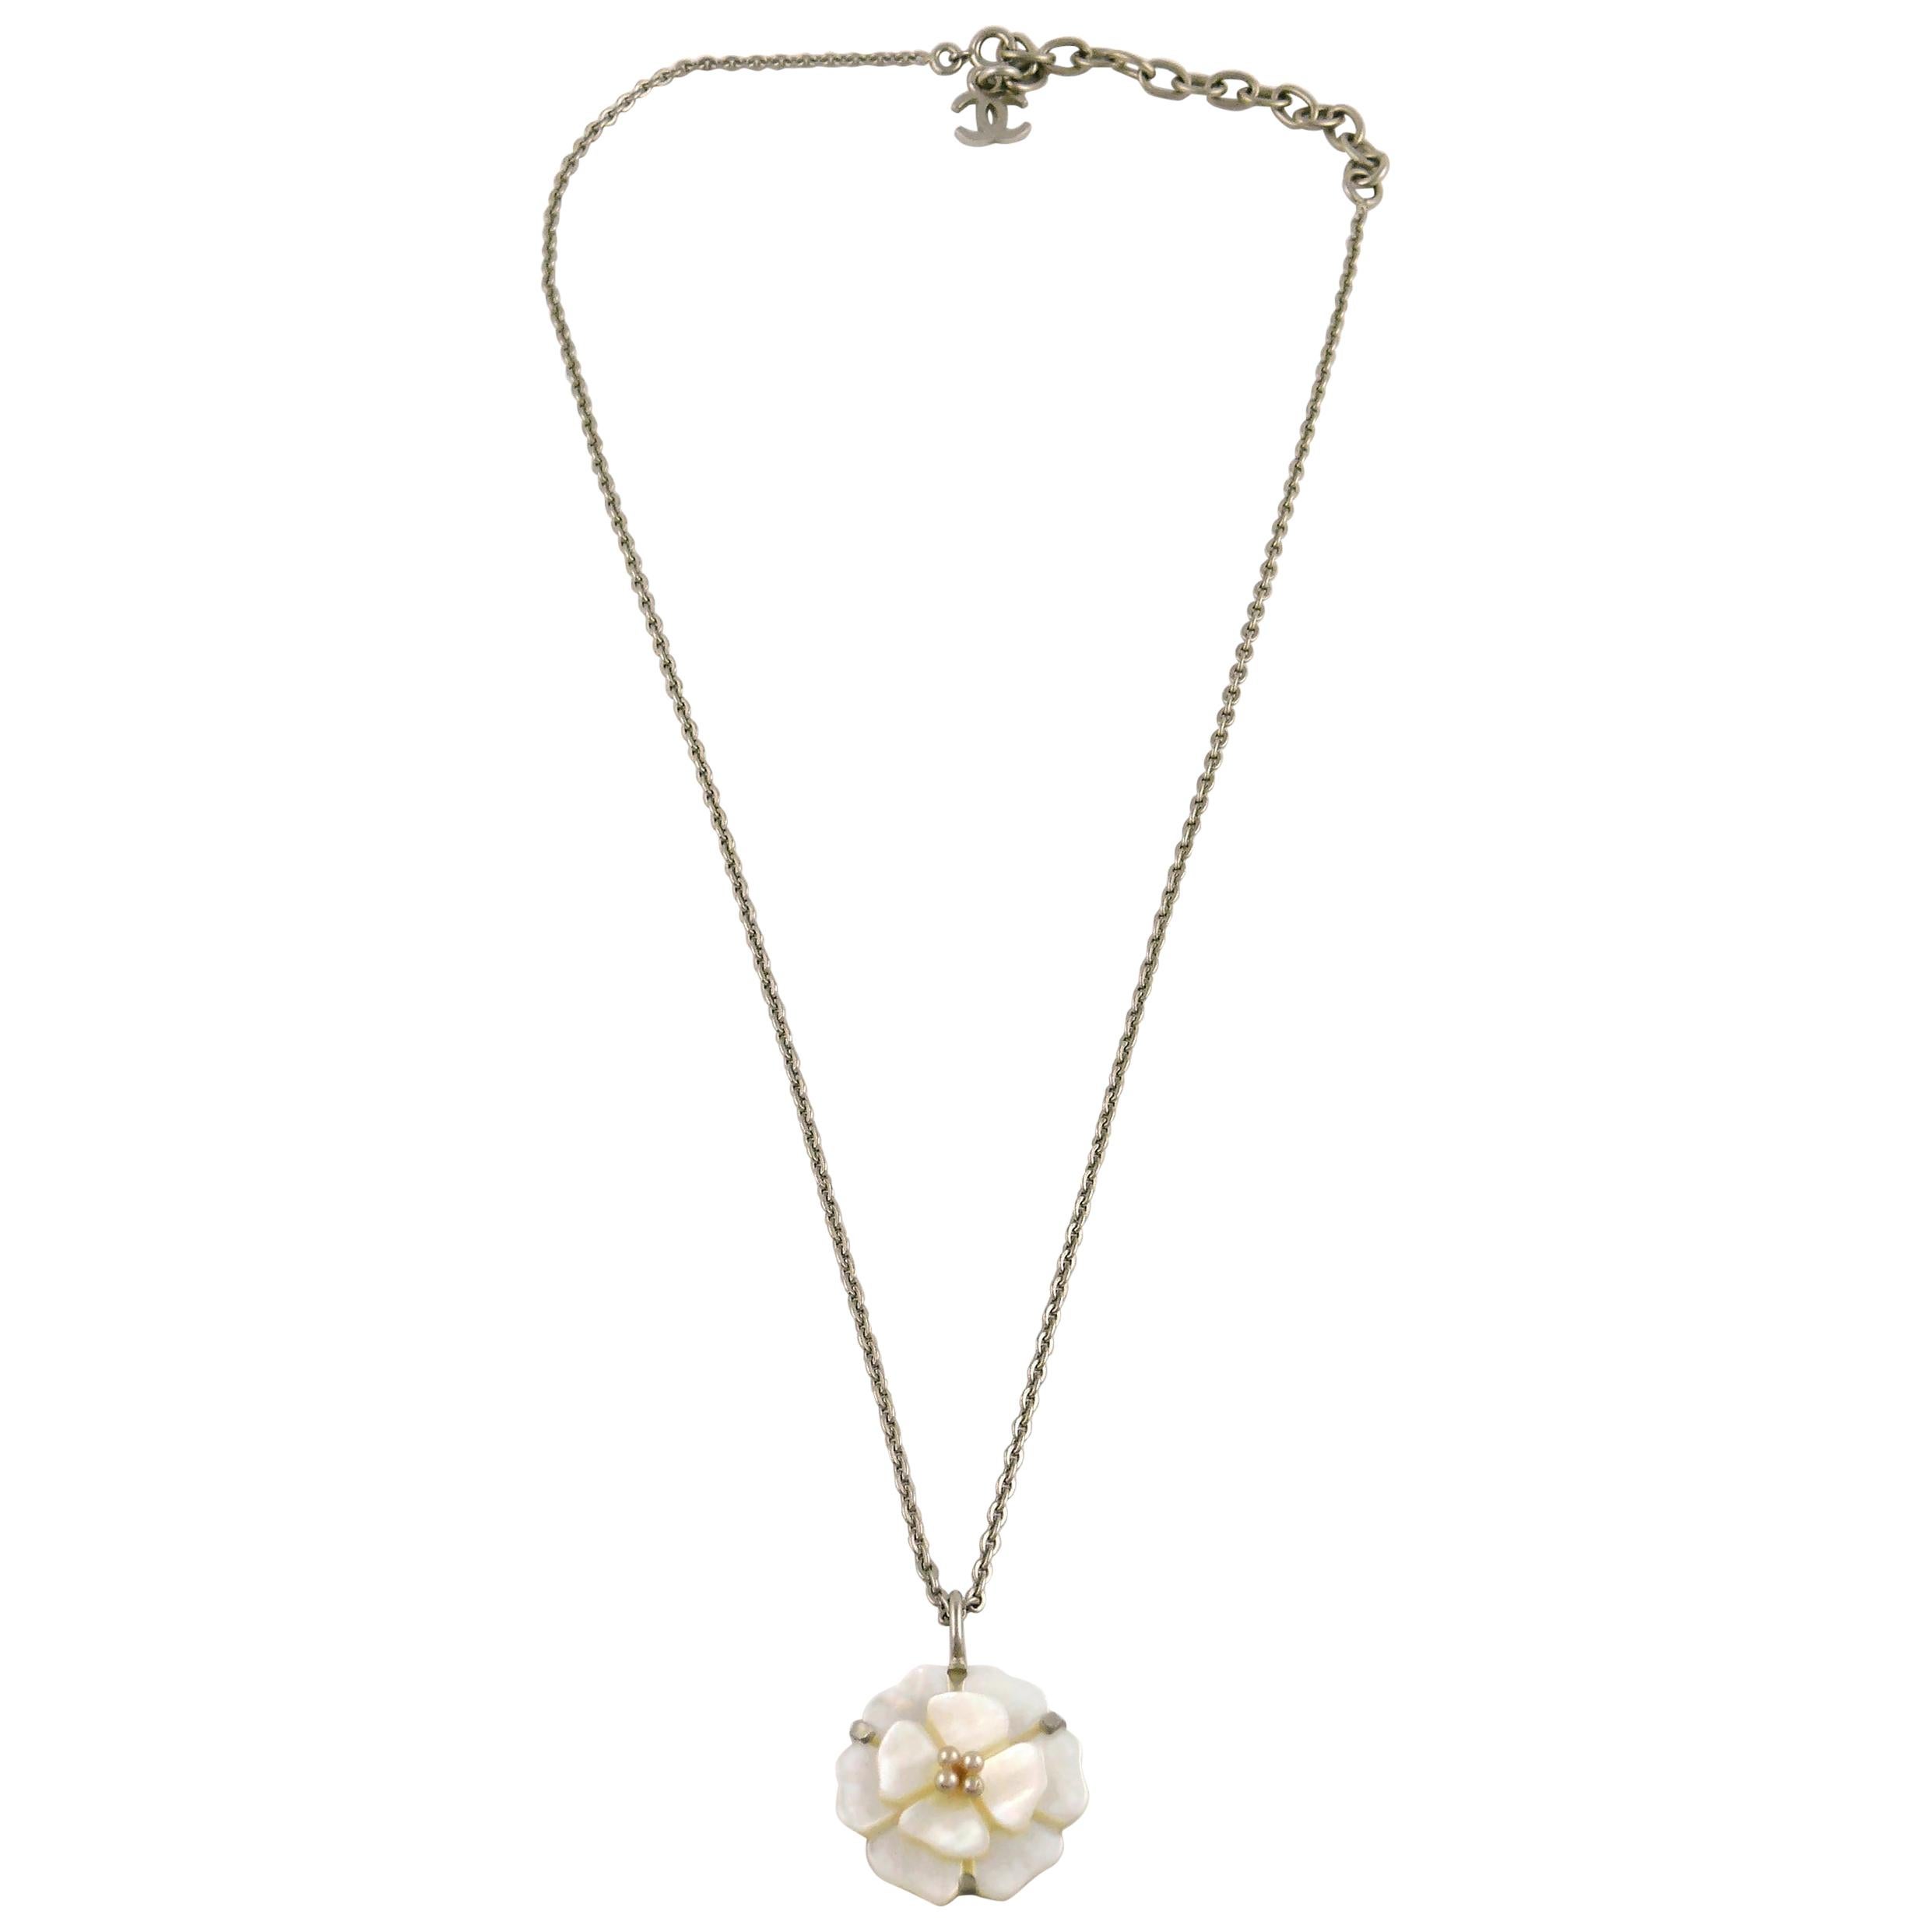 Chanel Vintage Silver Toned Camellia Flower Pendant Necklace